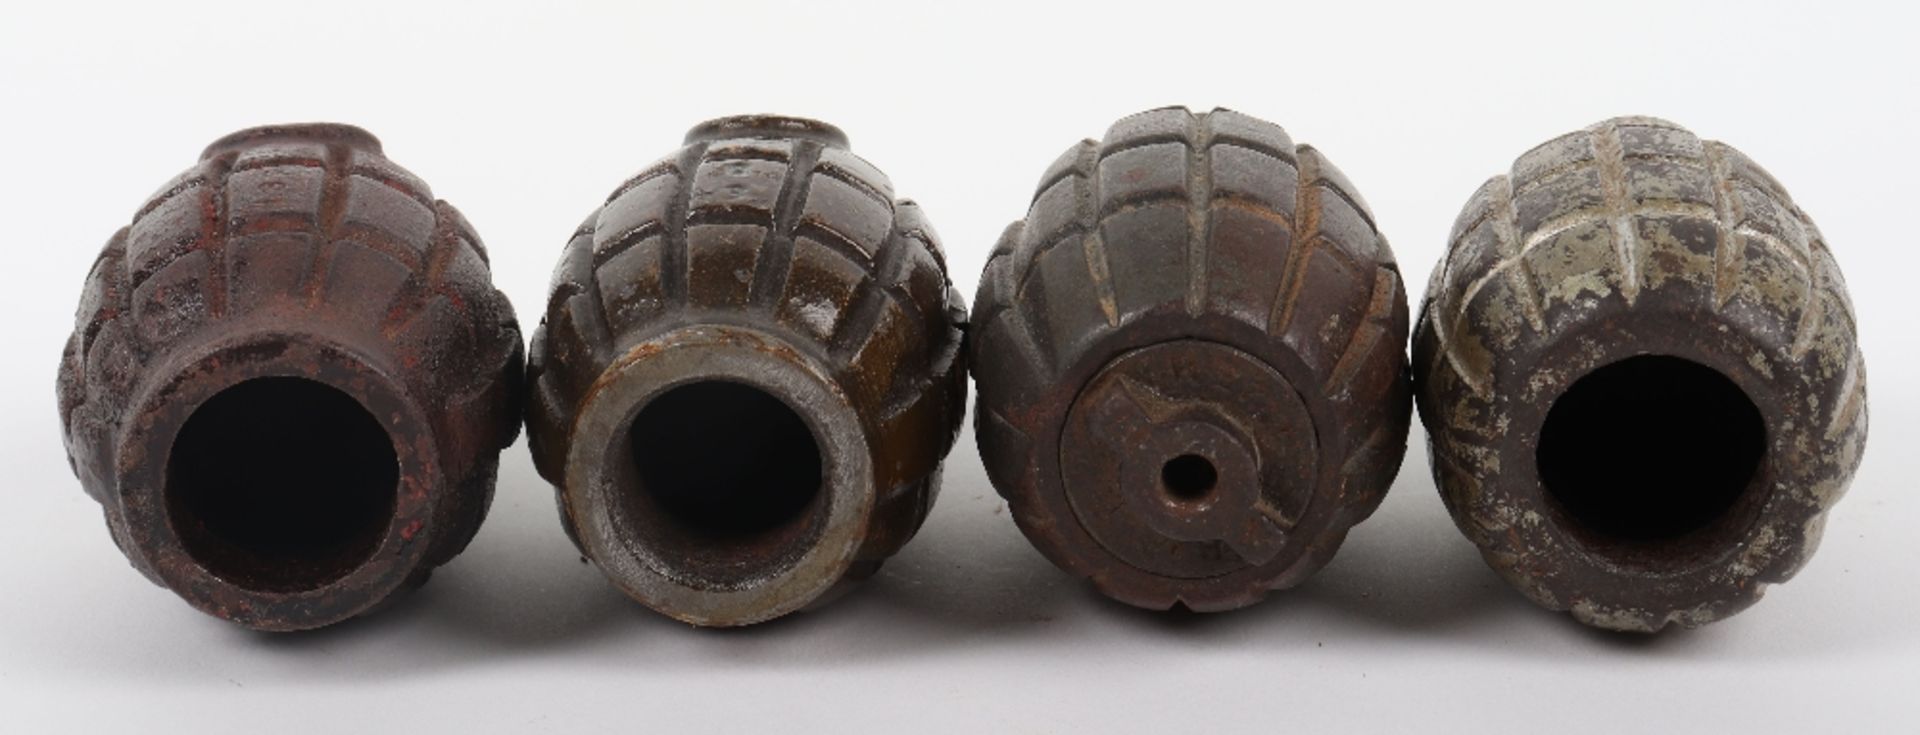 4x Inert British Mills Grenade Bodies - Image 4 of 4